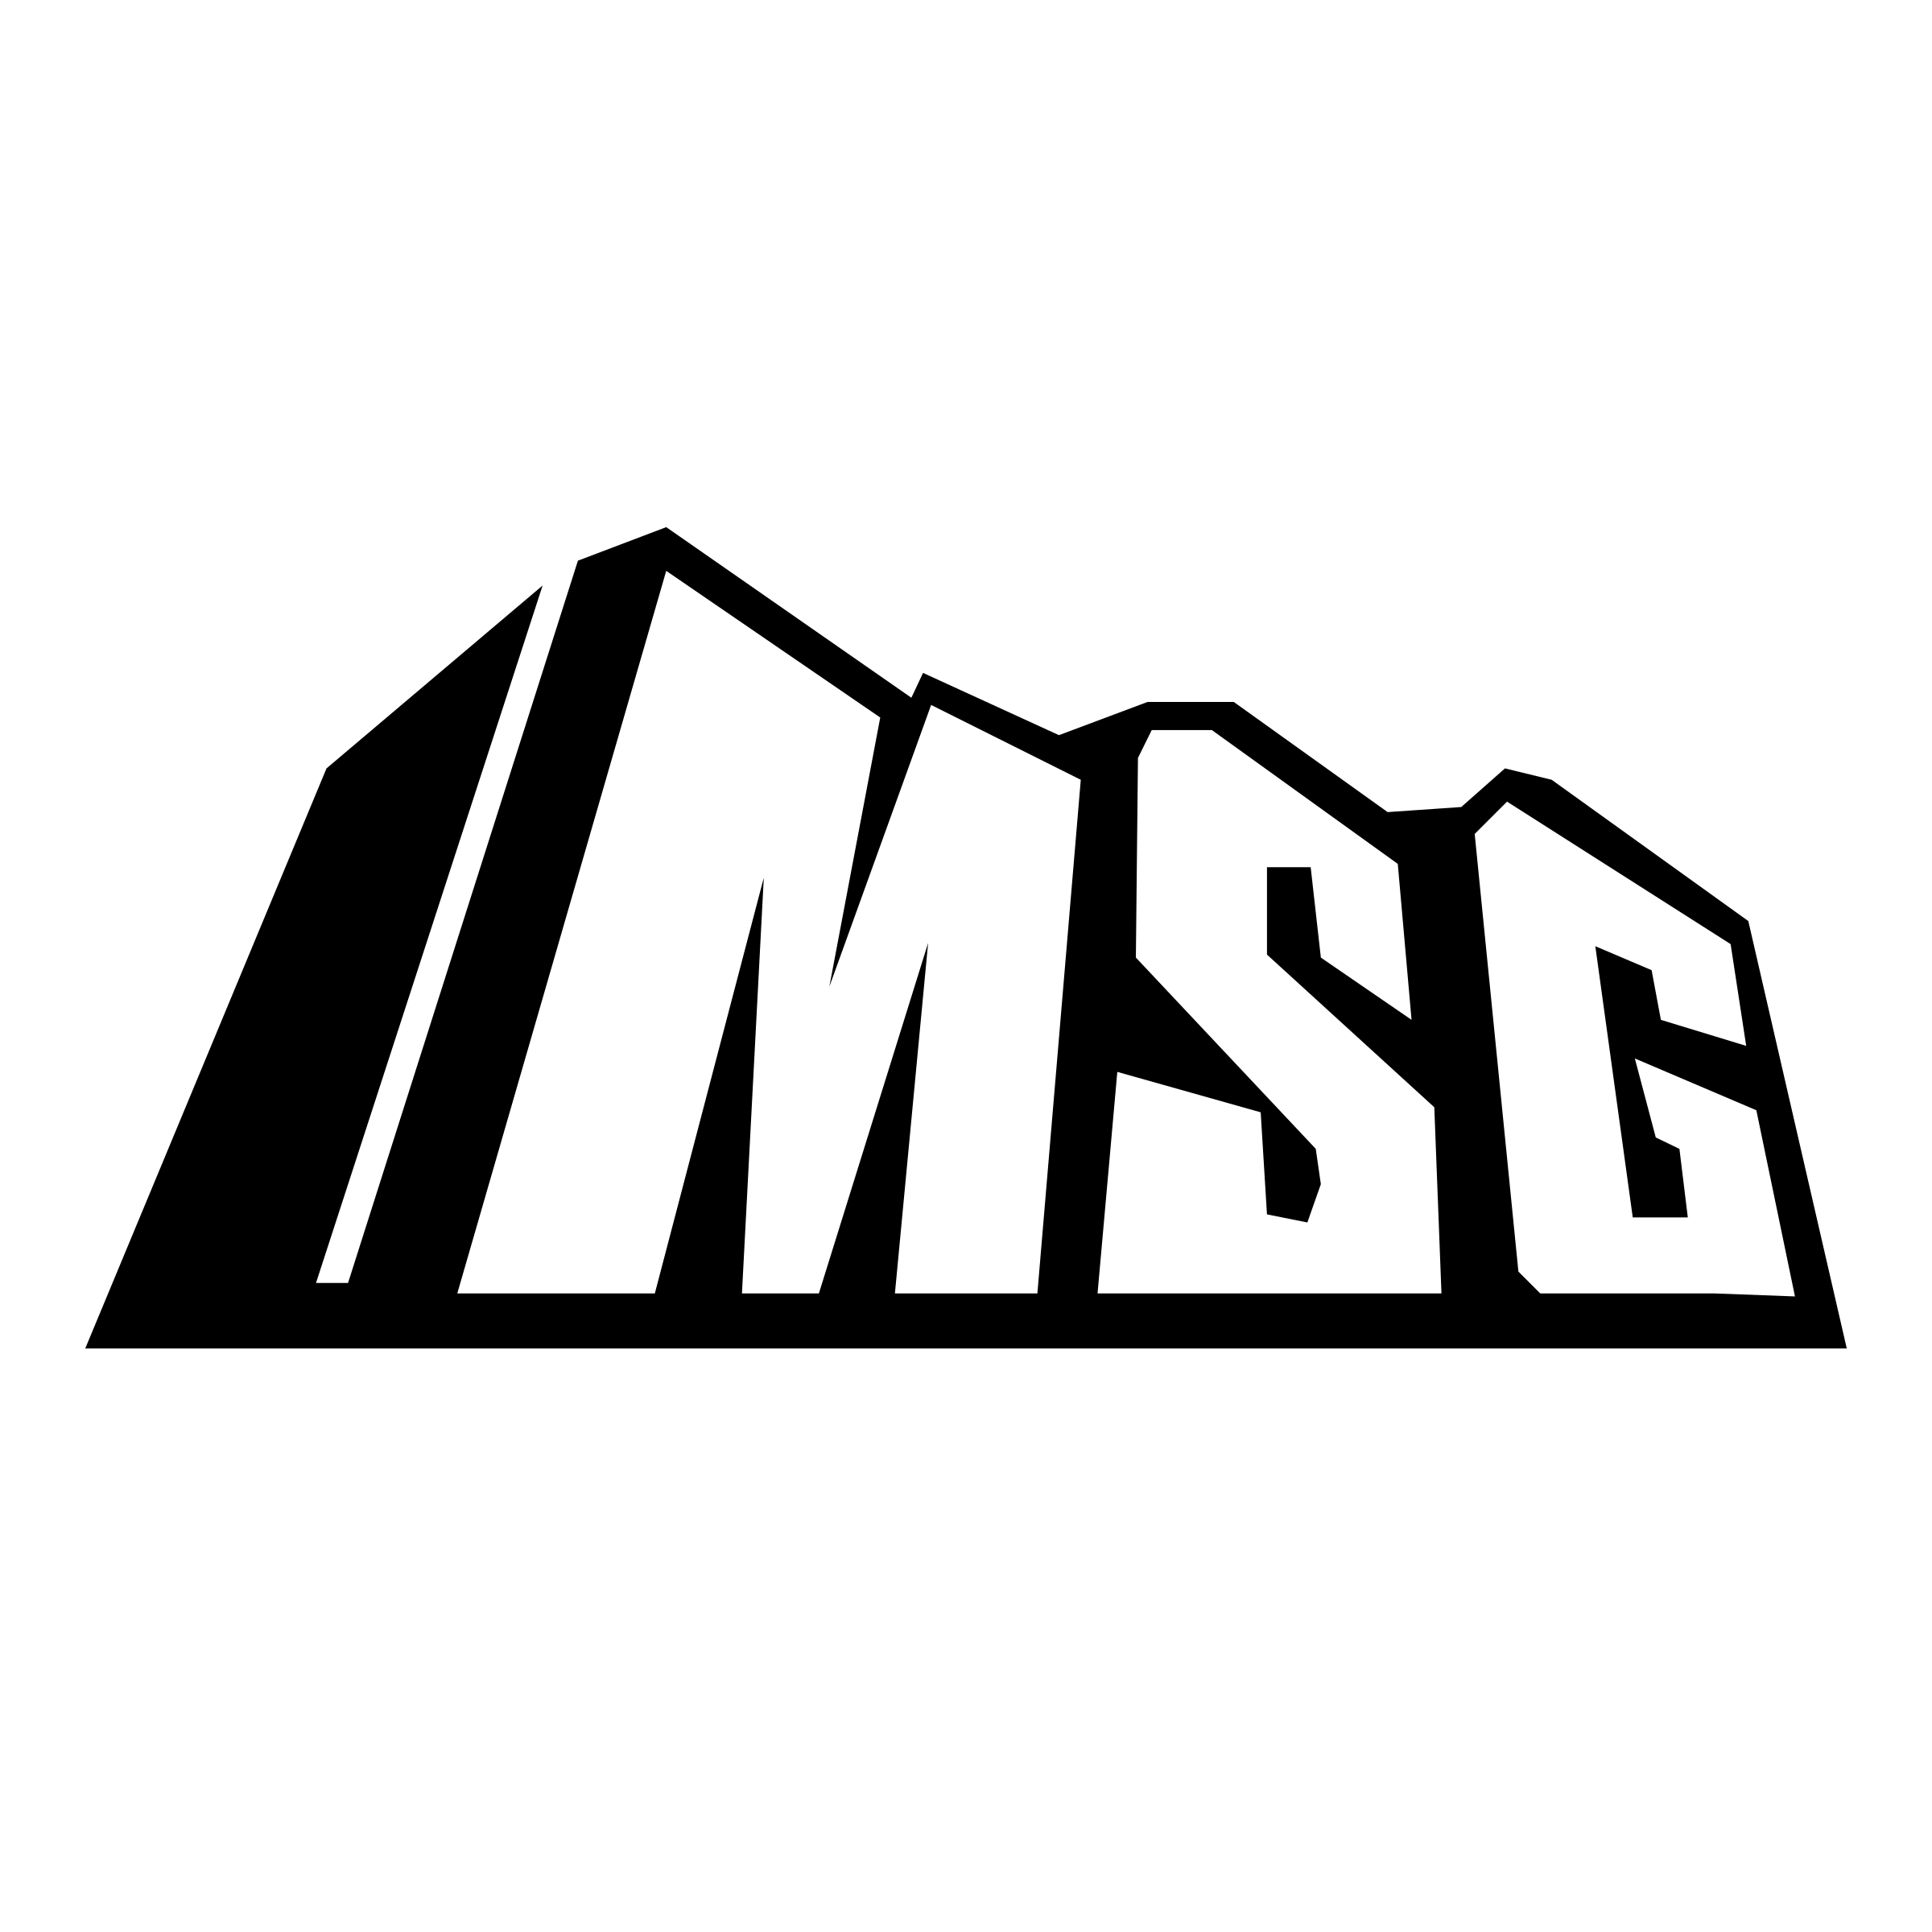 msg-network-logo-png-transparent.png